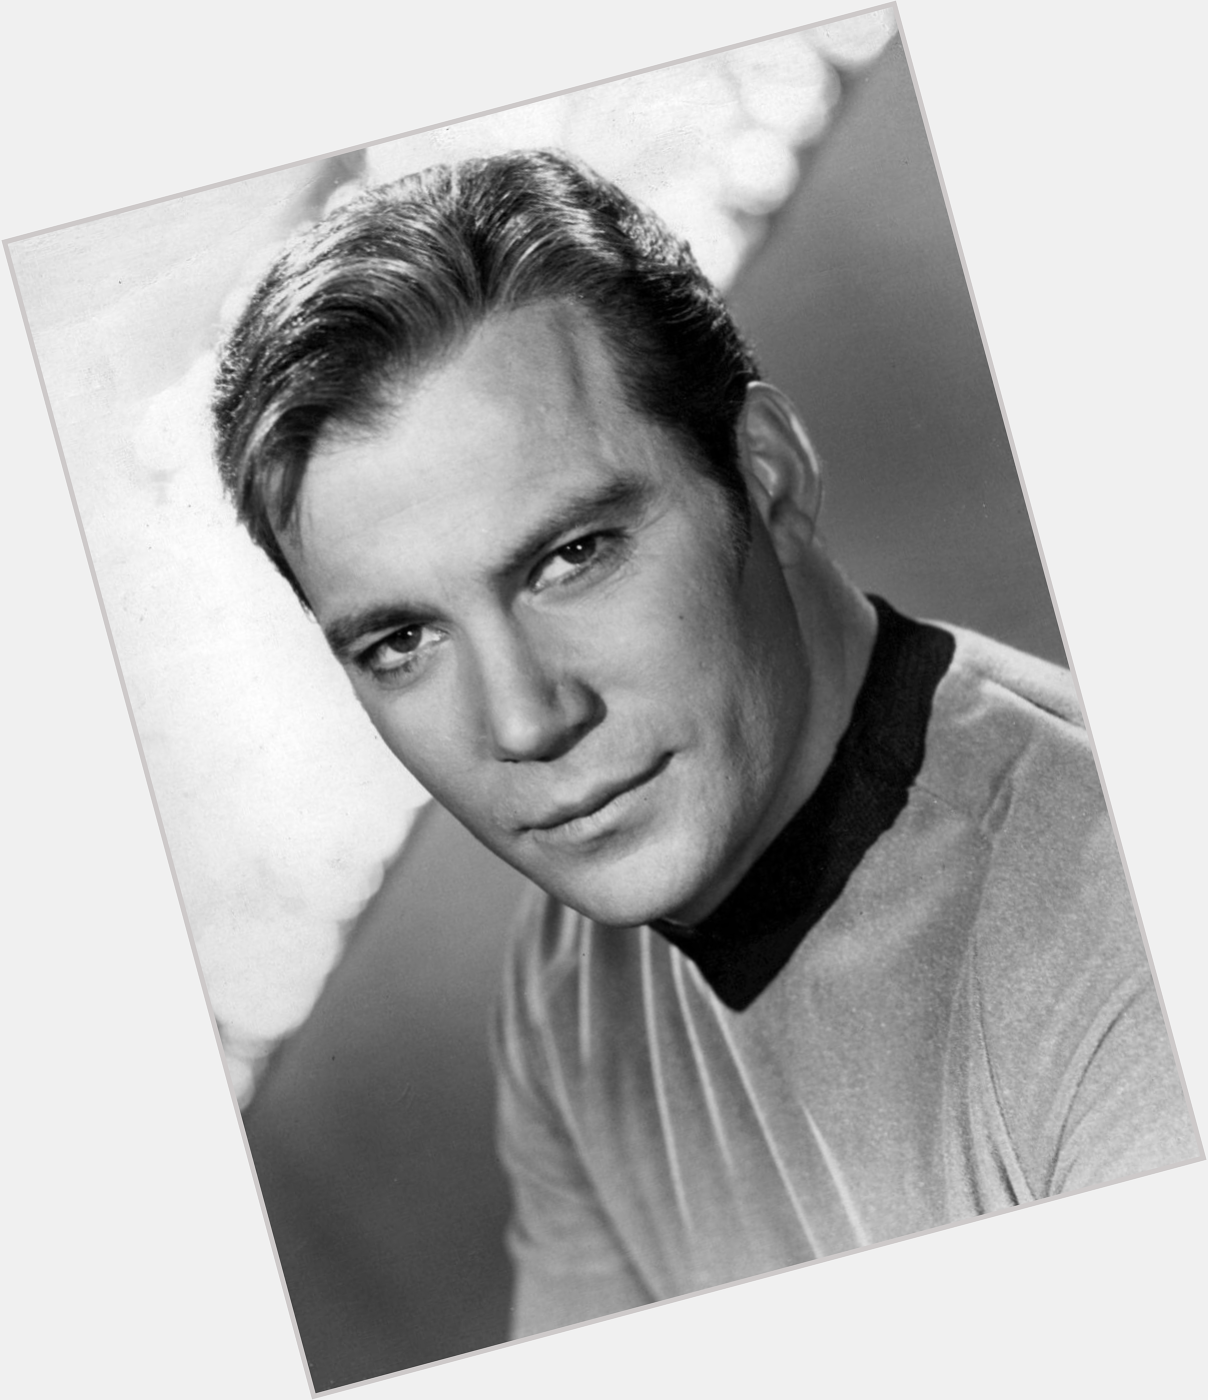 Happy 91st birthday to William Shatner, aka Captain Kirk! 